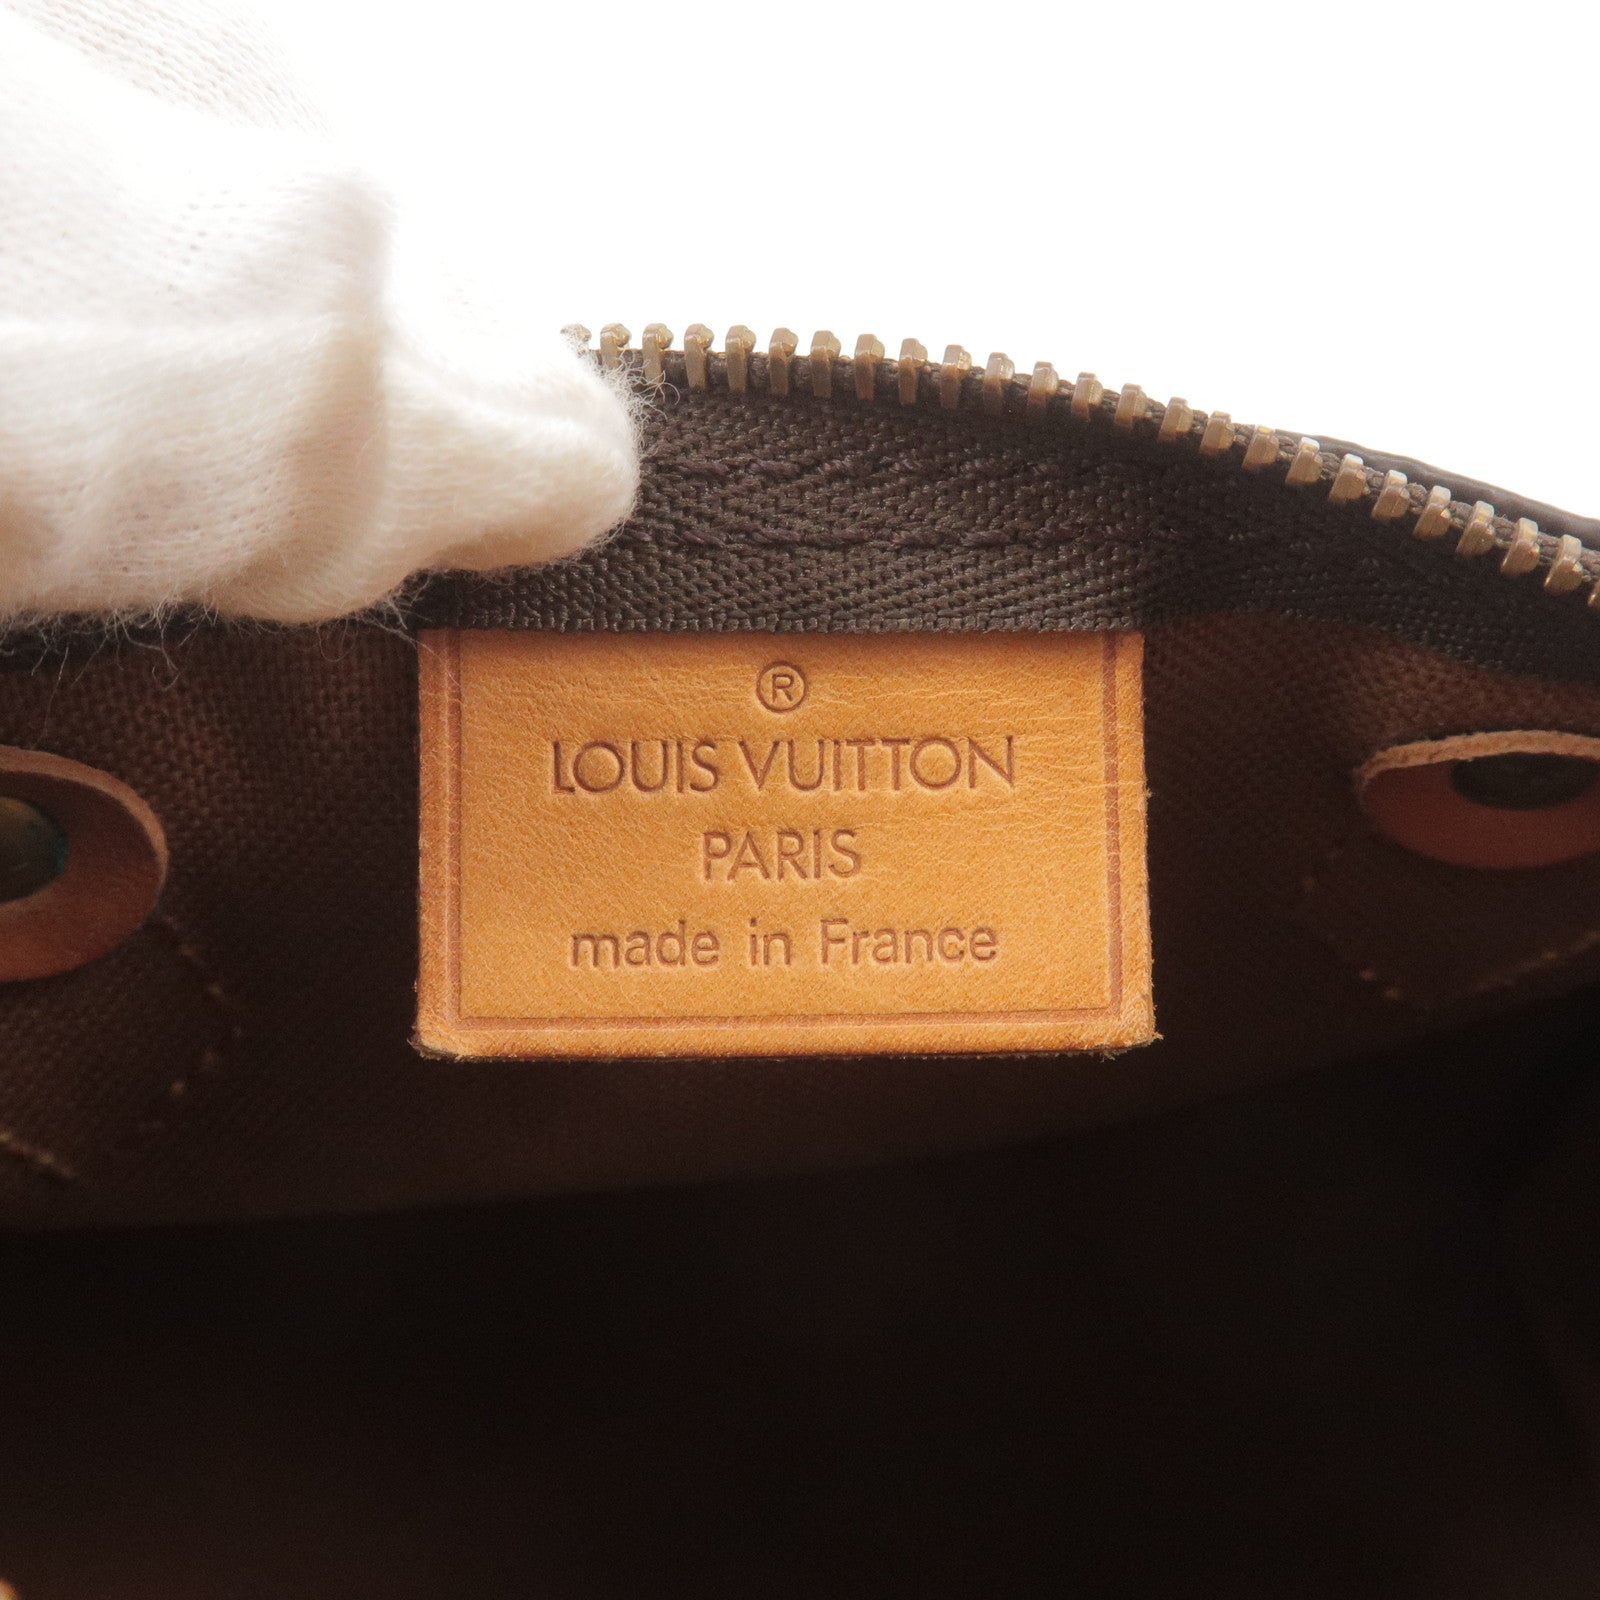 QUICK TIP: Louis Vuitton Delightful Strap Hack